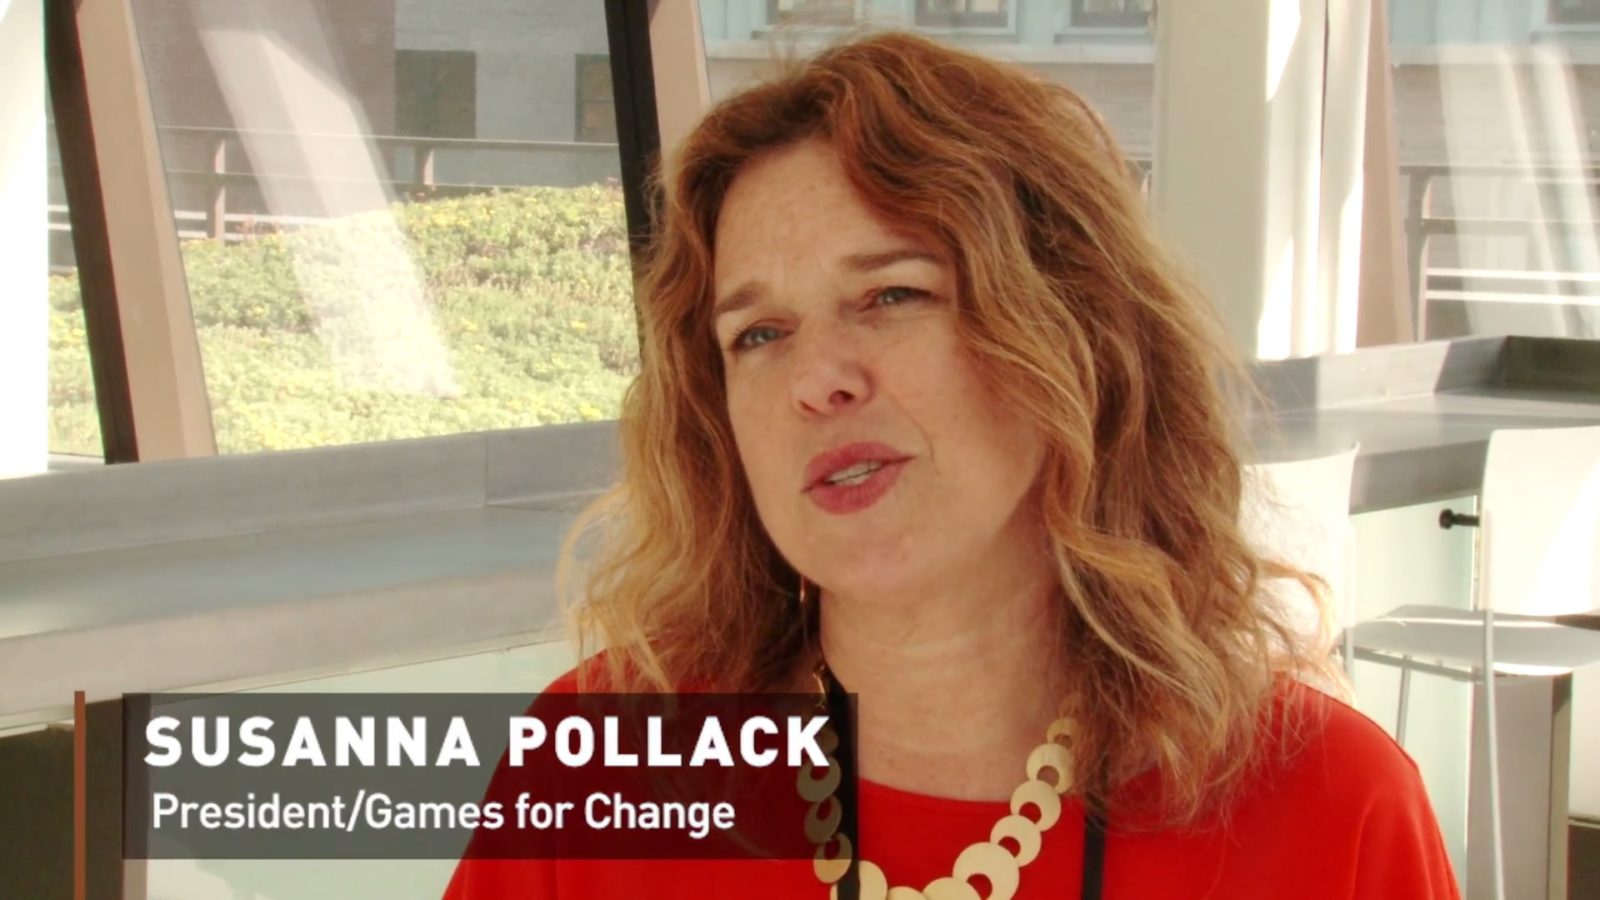 Games for Change President Susanna Pollack (Credit: Games for Change YouTube screenshot)